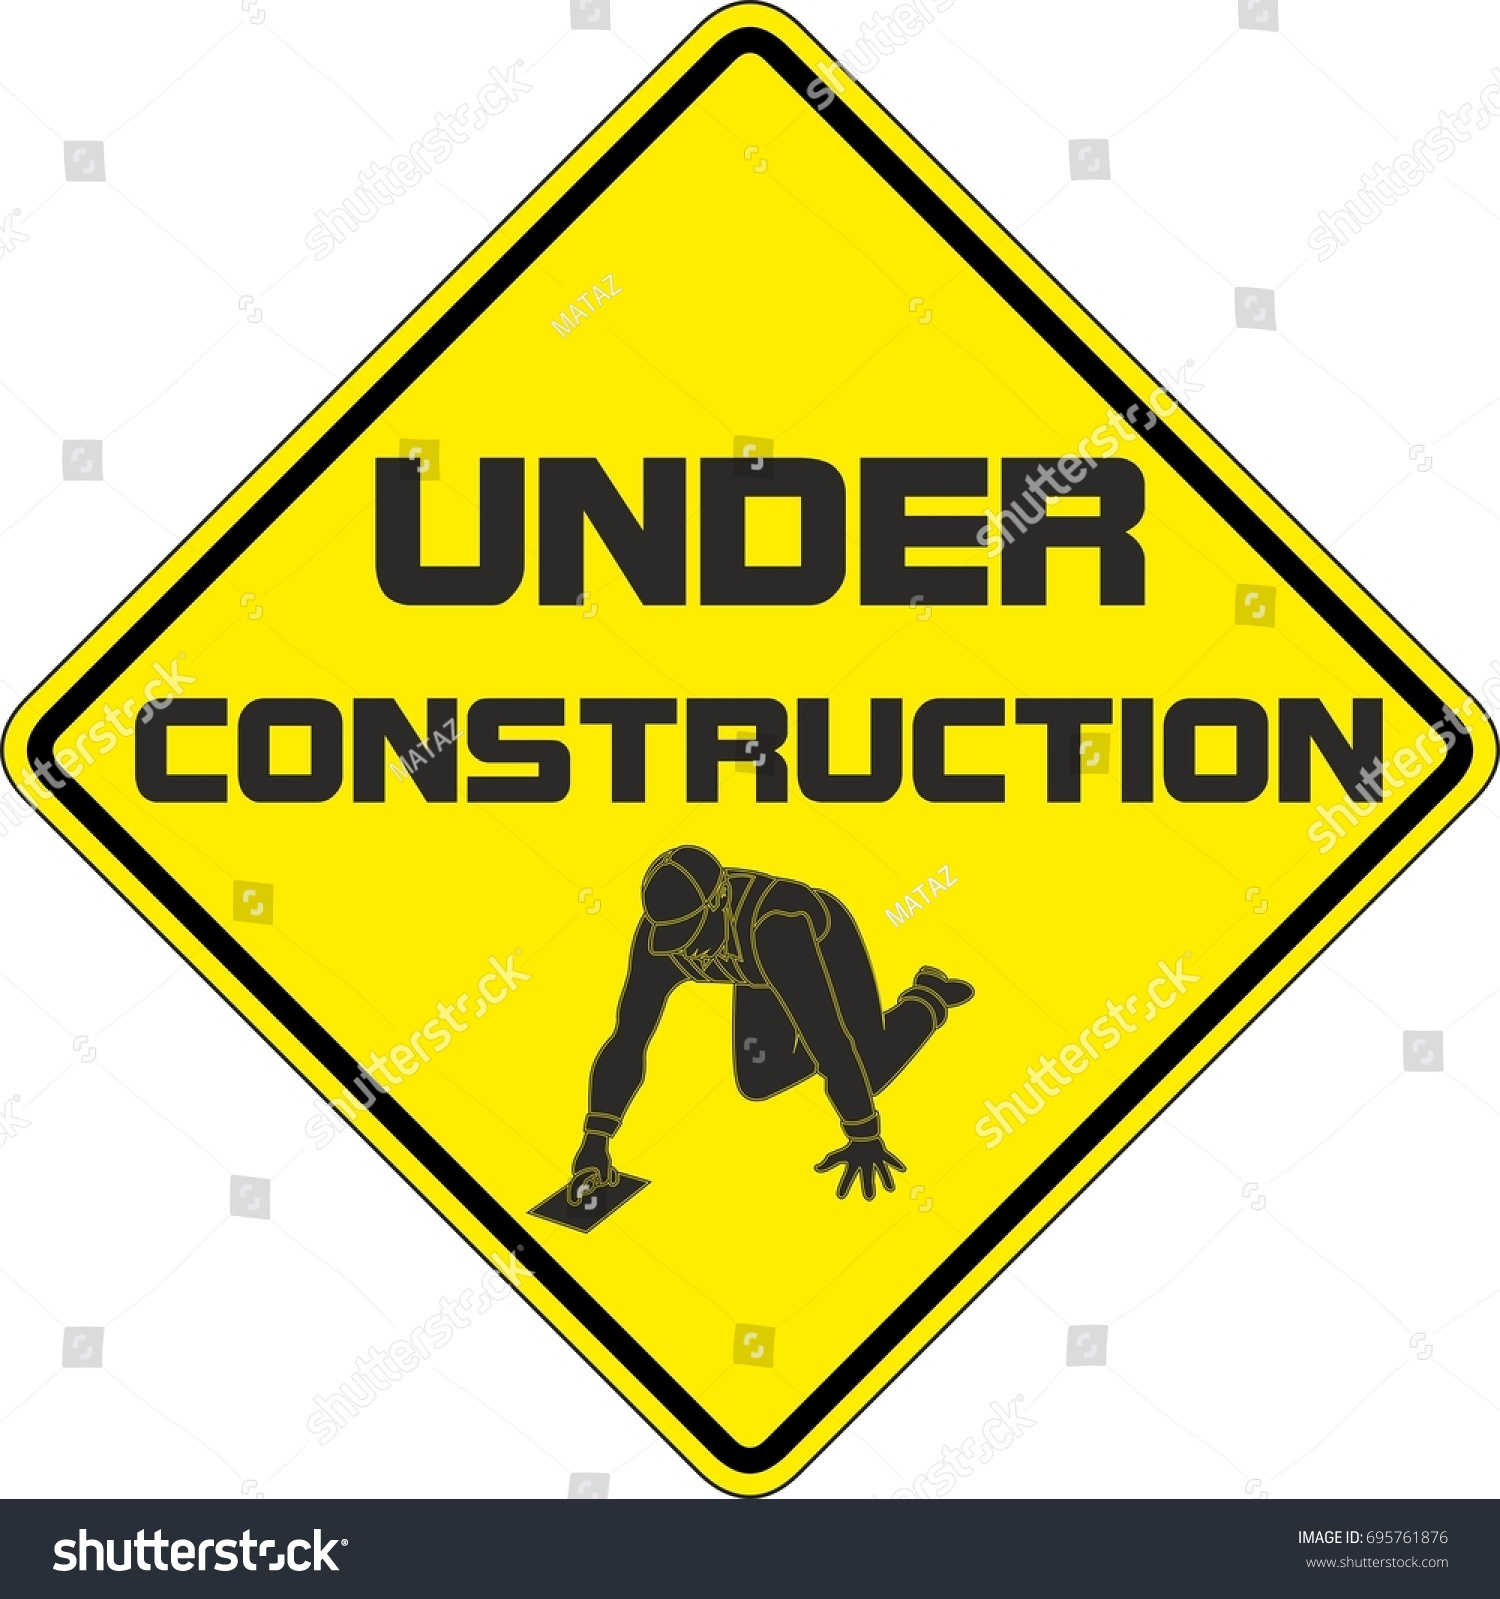 Under construction sign symbol - Royalty Free Stock Photo 695761876 ...